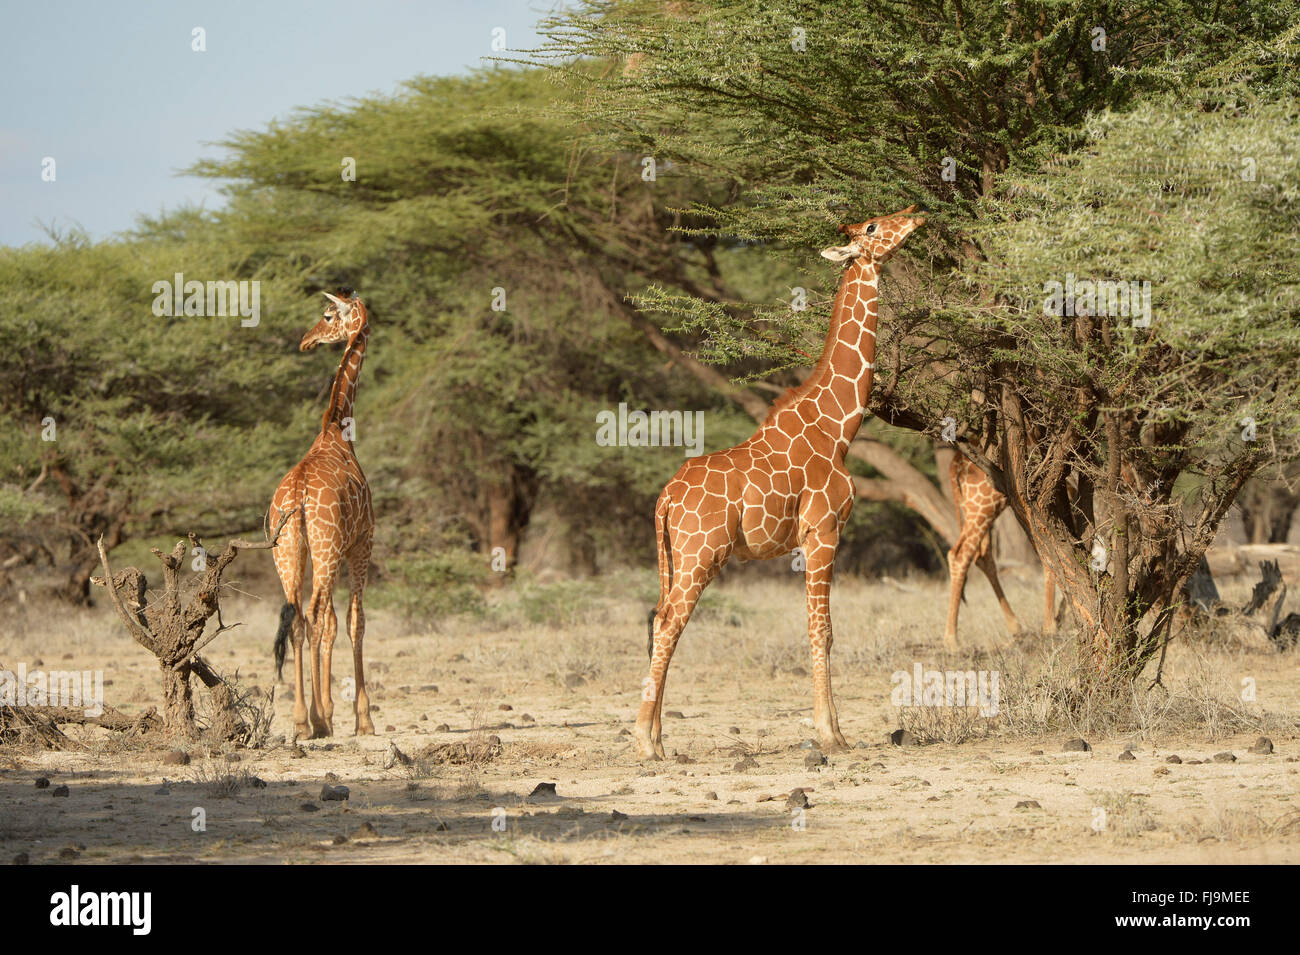 Jirafa reticulada (Giraffa camelopardalis reticulata) alimentándose de árboles de acacia, la Reserva Nacional de Shaba, Kenya, octubre Foto de stock